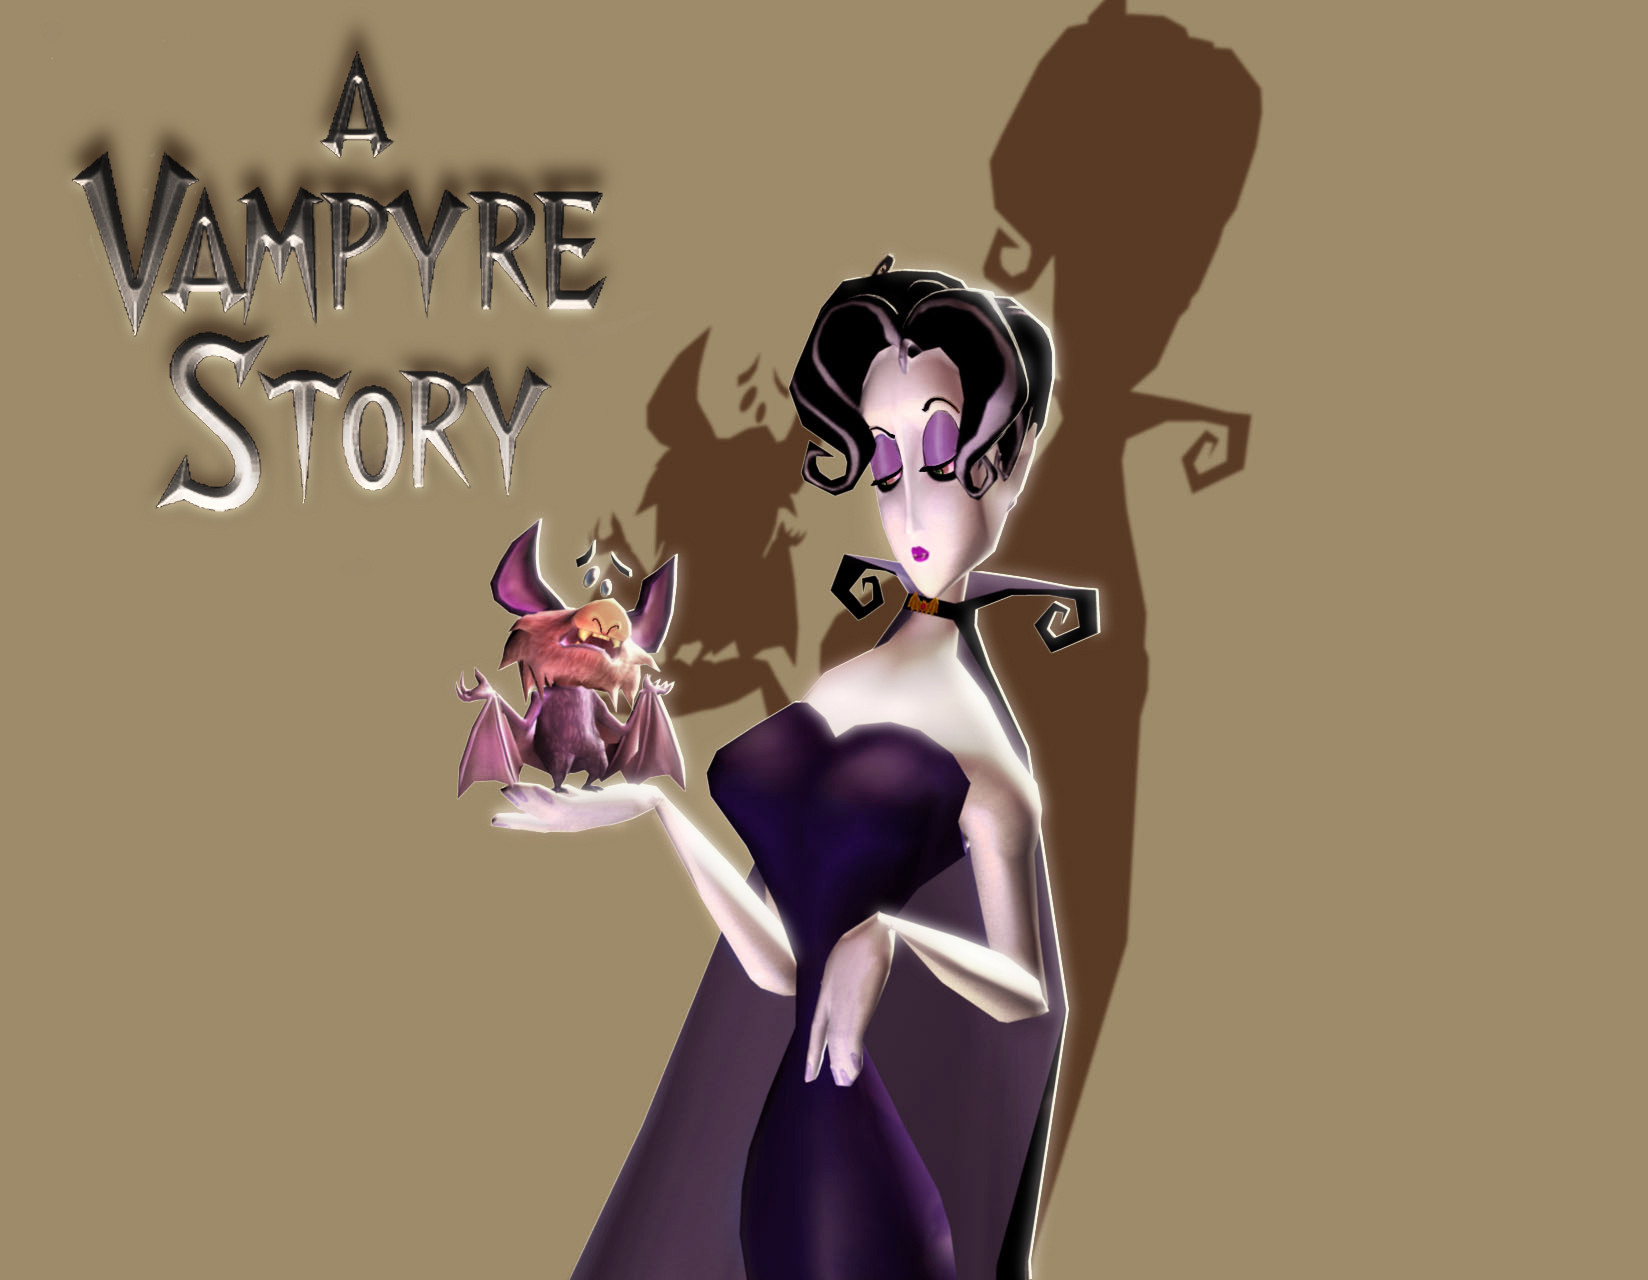 Vampire story game. A Vampyre story Мона. Vampyre story игра. Мона де Лафитт.